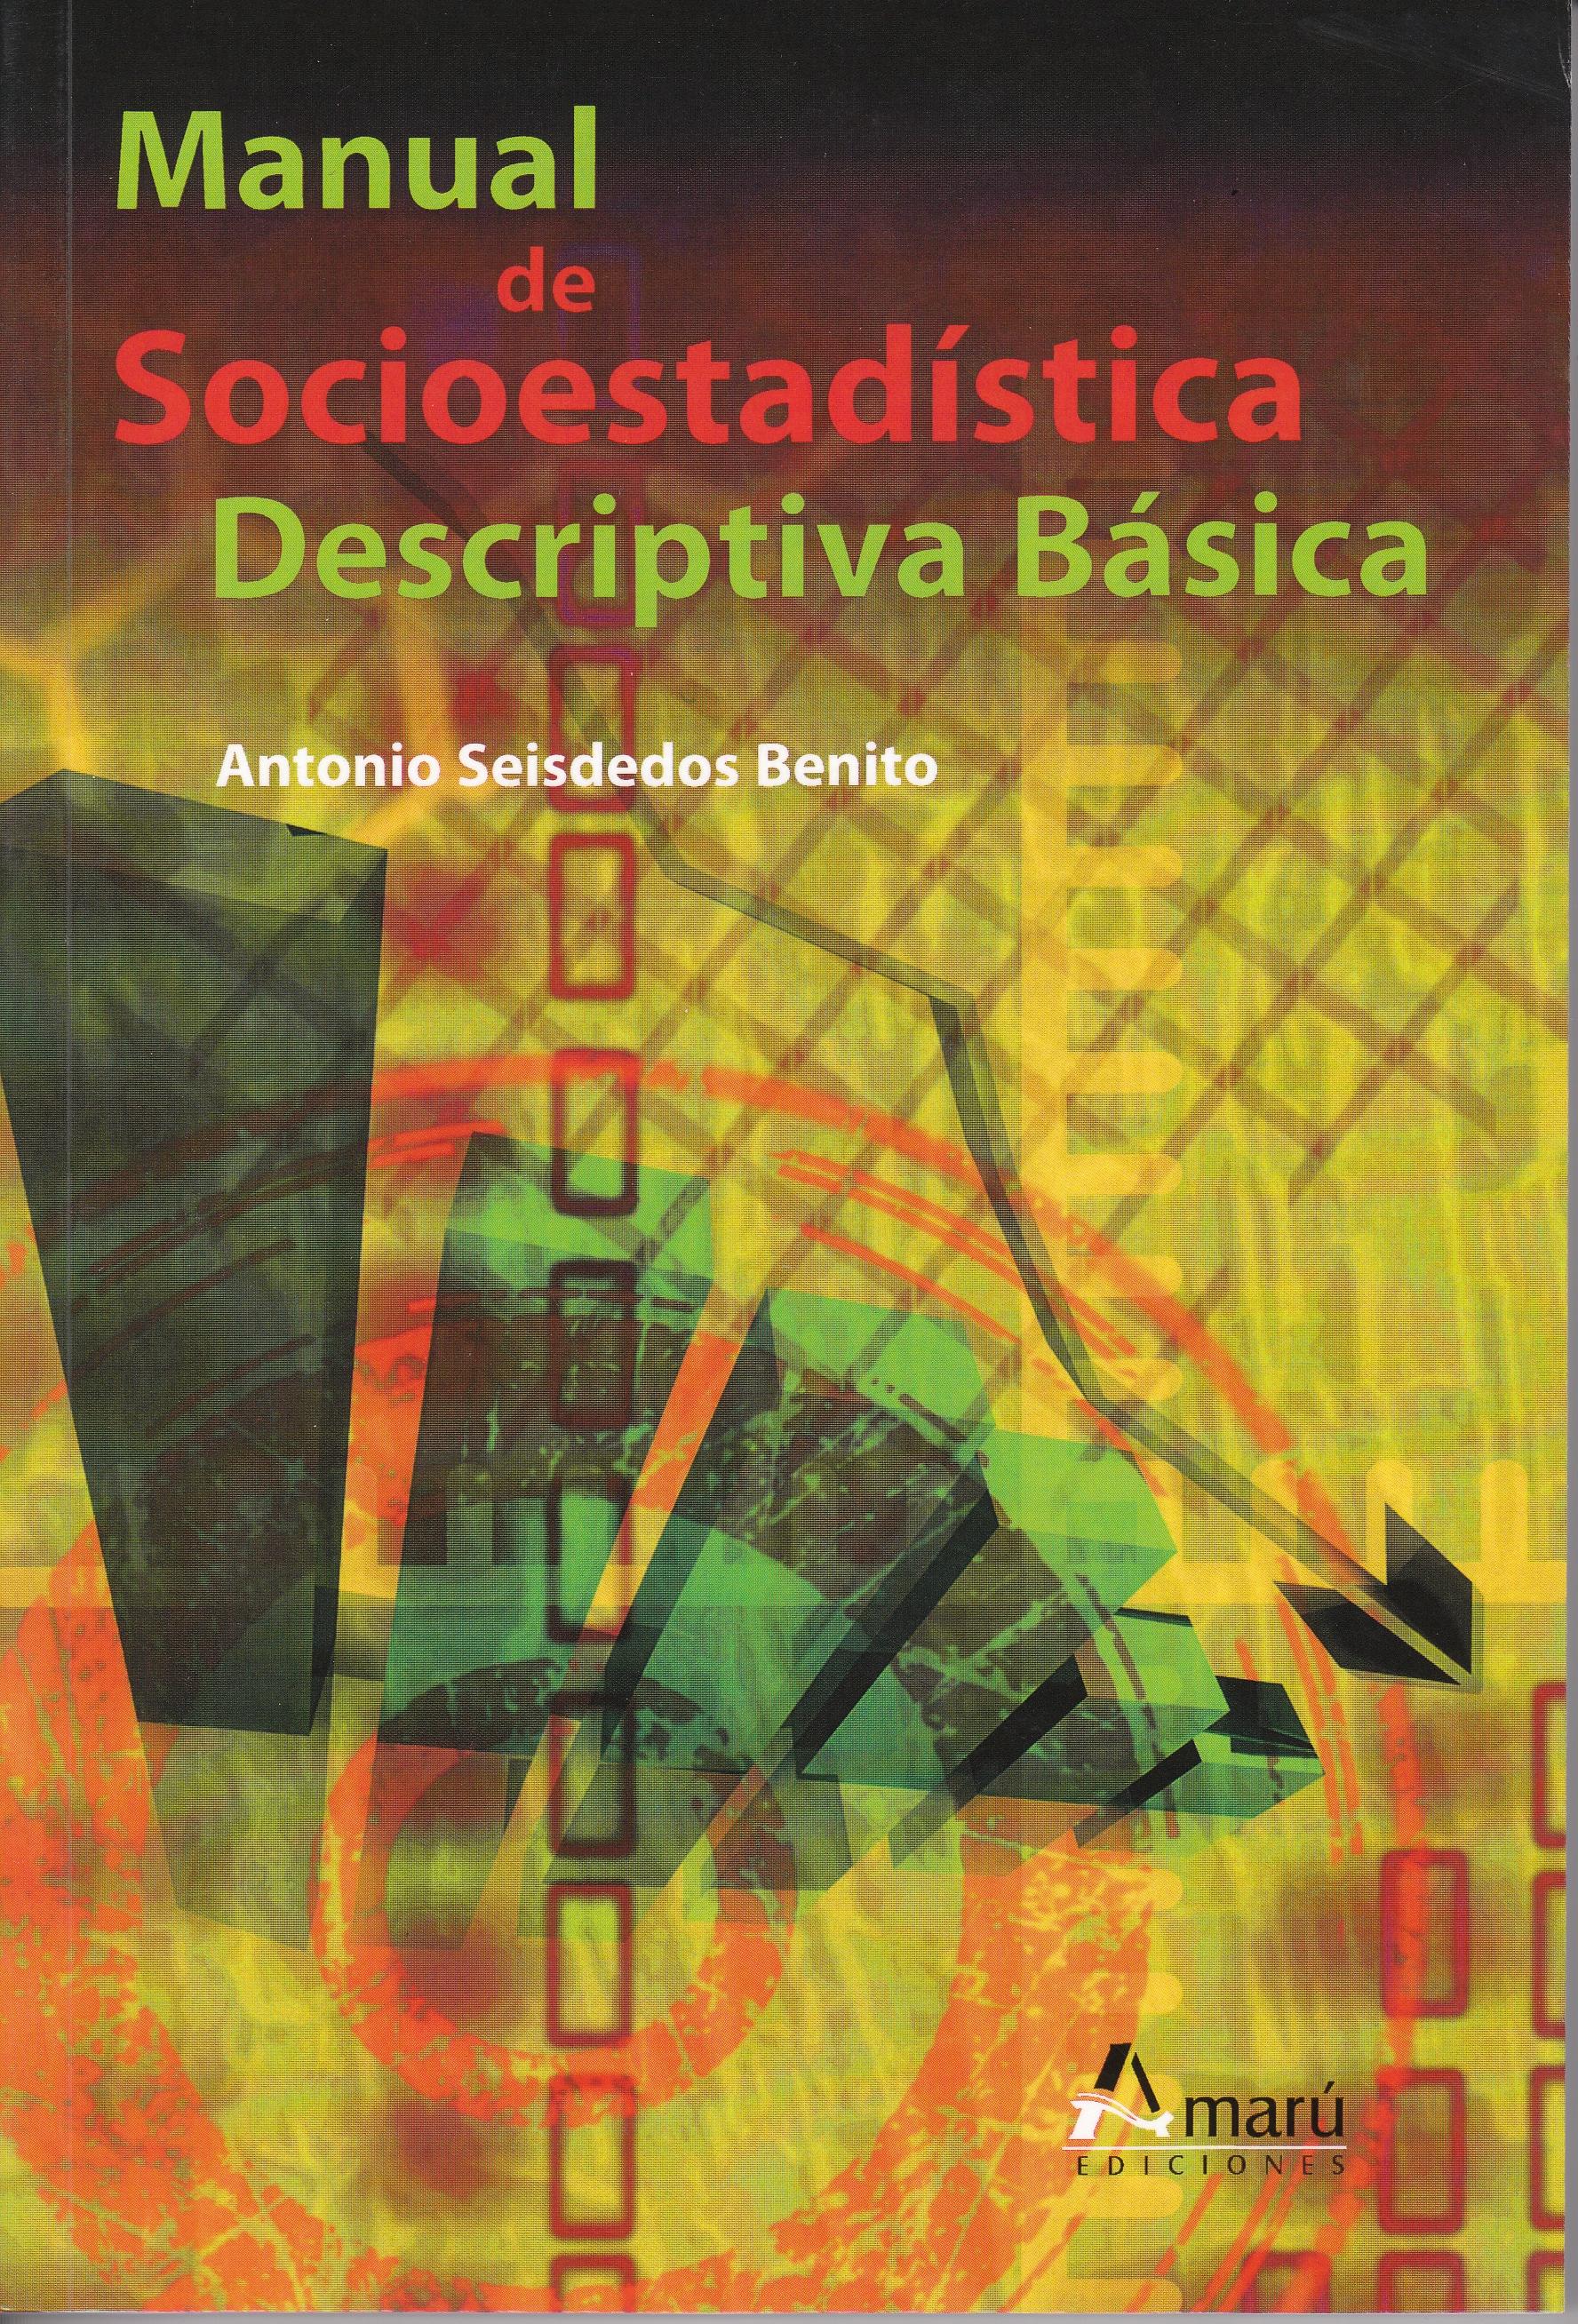 Manual de Socioestadistica Descriptiva Basica